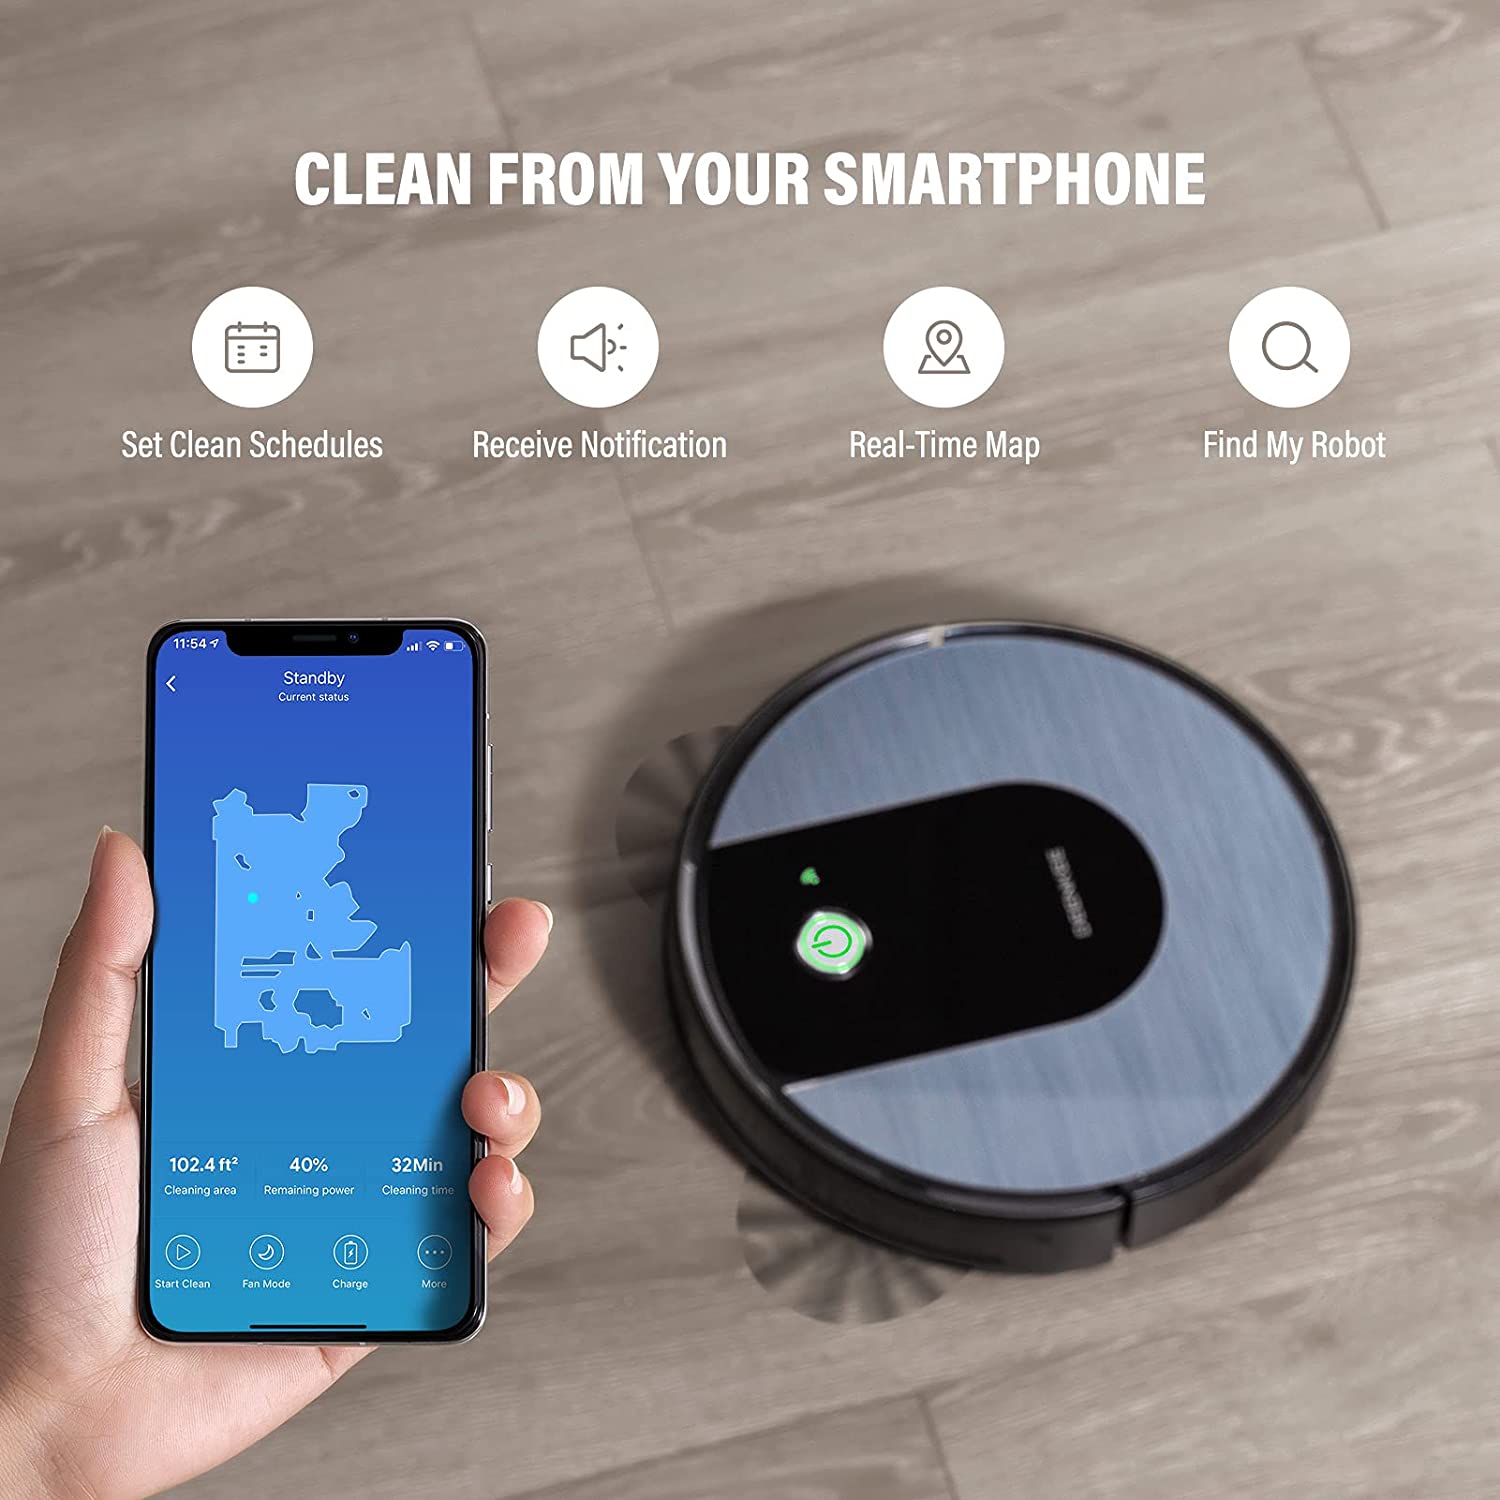 Deenkee DK700 Wi-Fi/App/Alexa Robot Vacuum Cleaner 1600Pa Suction for Pet Hair, Hard Floors And Carpets